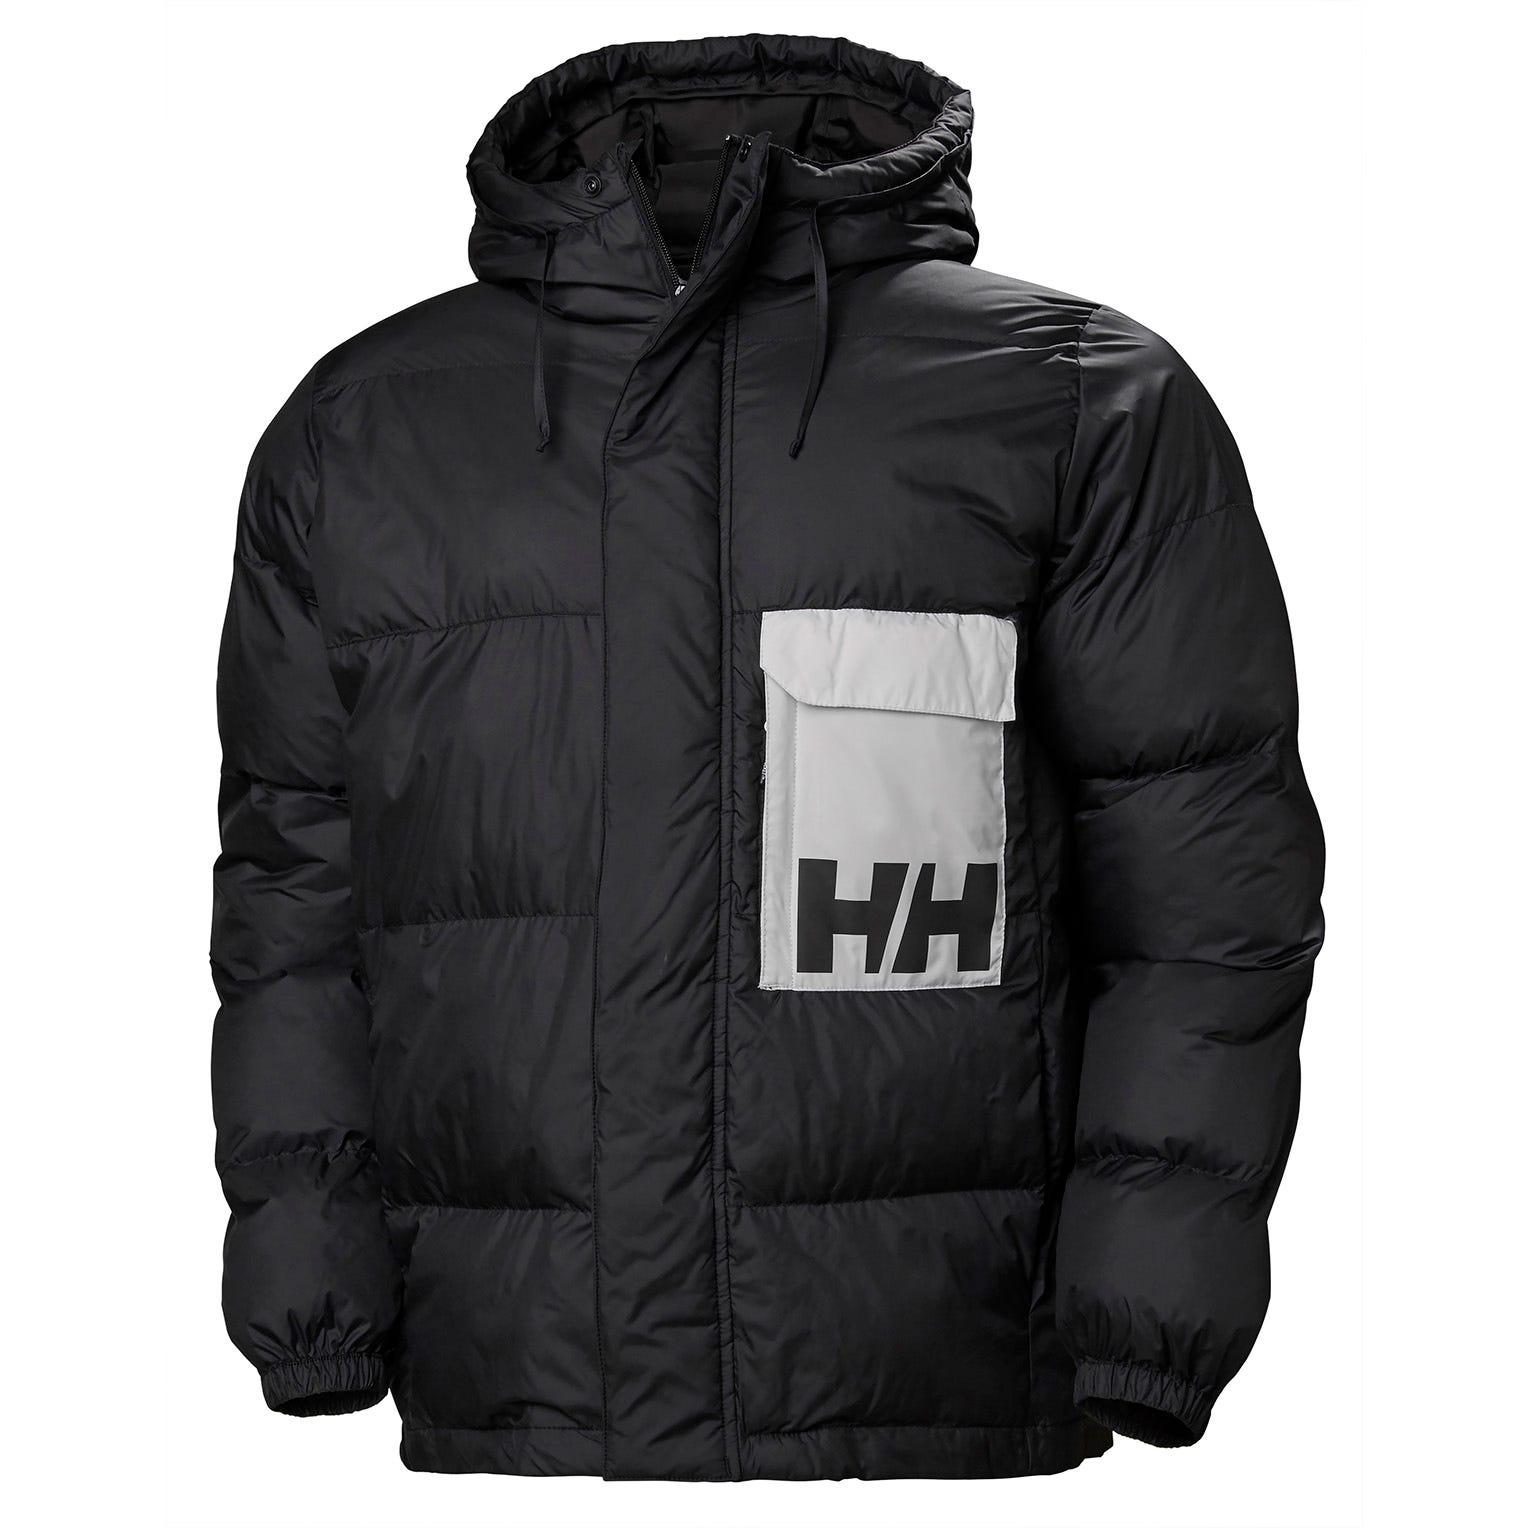 Helly Hansen Pc Puffer Jacket in Black for Men - Lyst